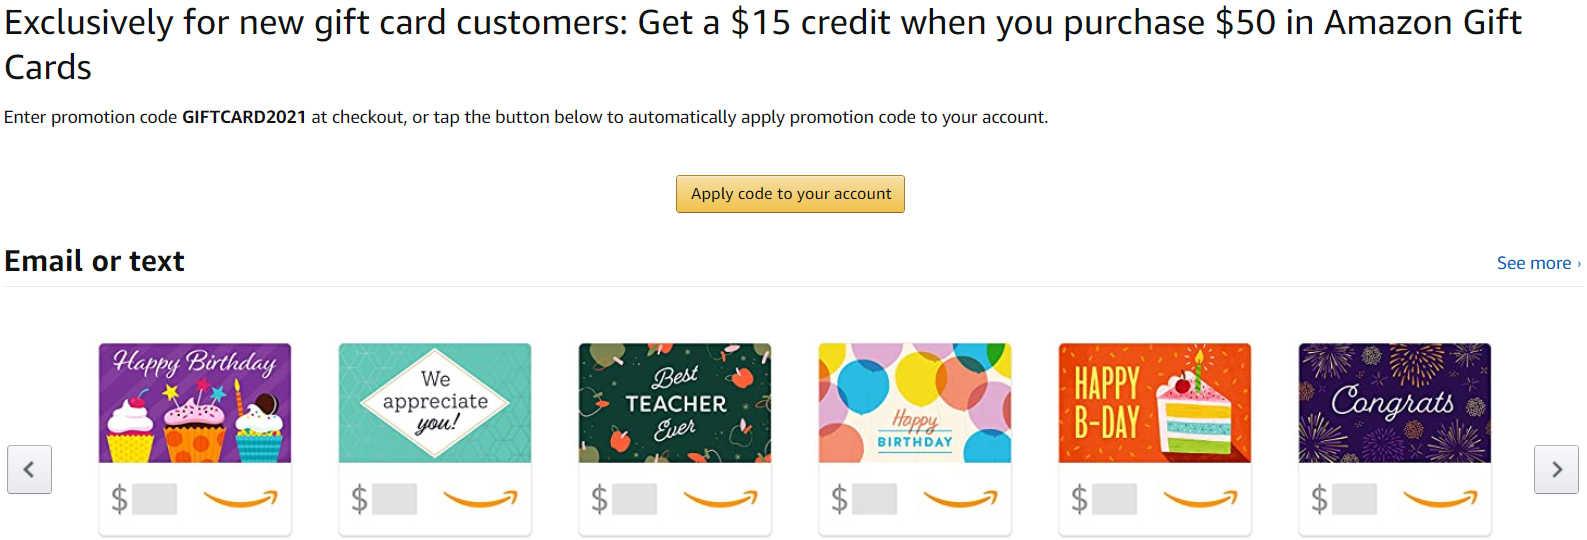 $15 Amazon Credit with Purchase of $50 Amazon Gift Card (YMMV)